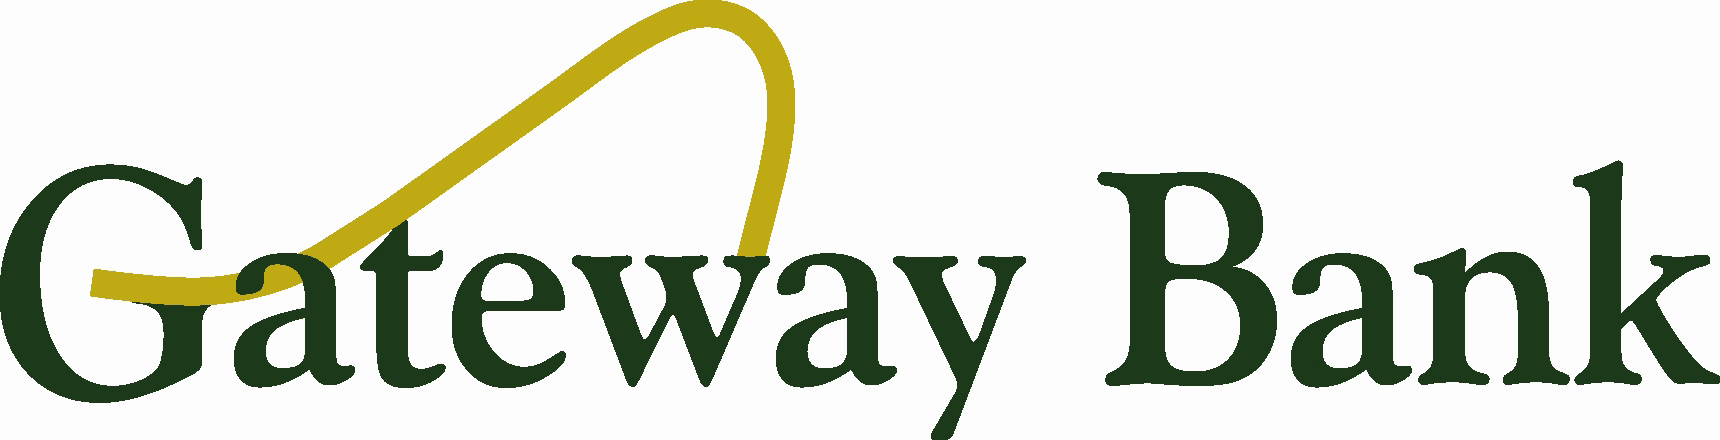 Gateway Financial Holdings, Inc. Logo